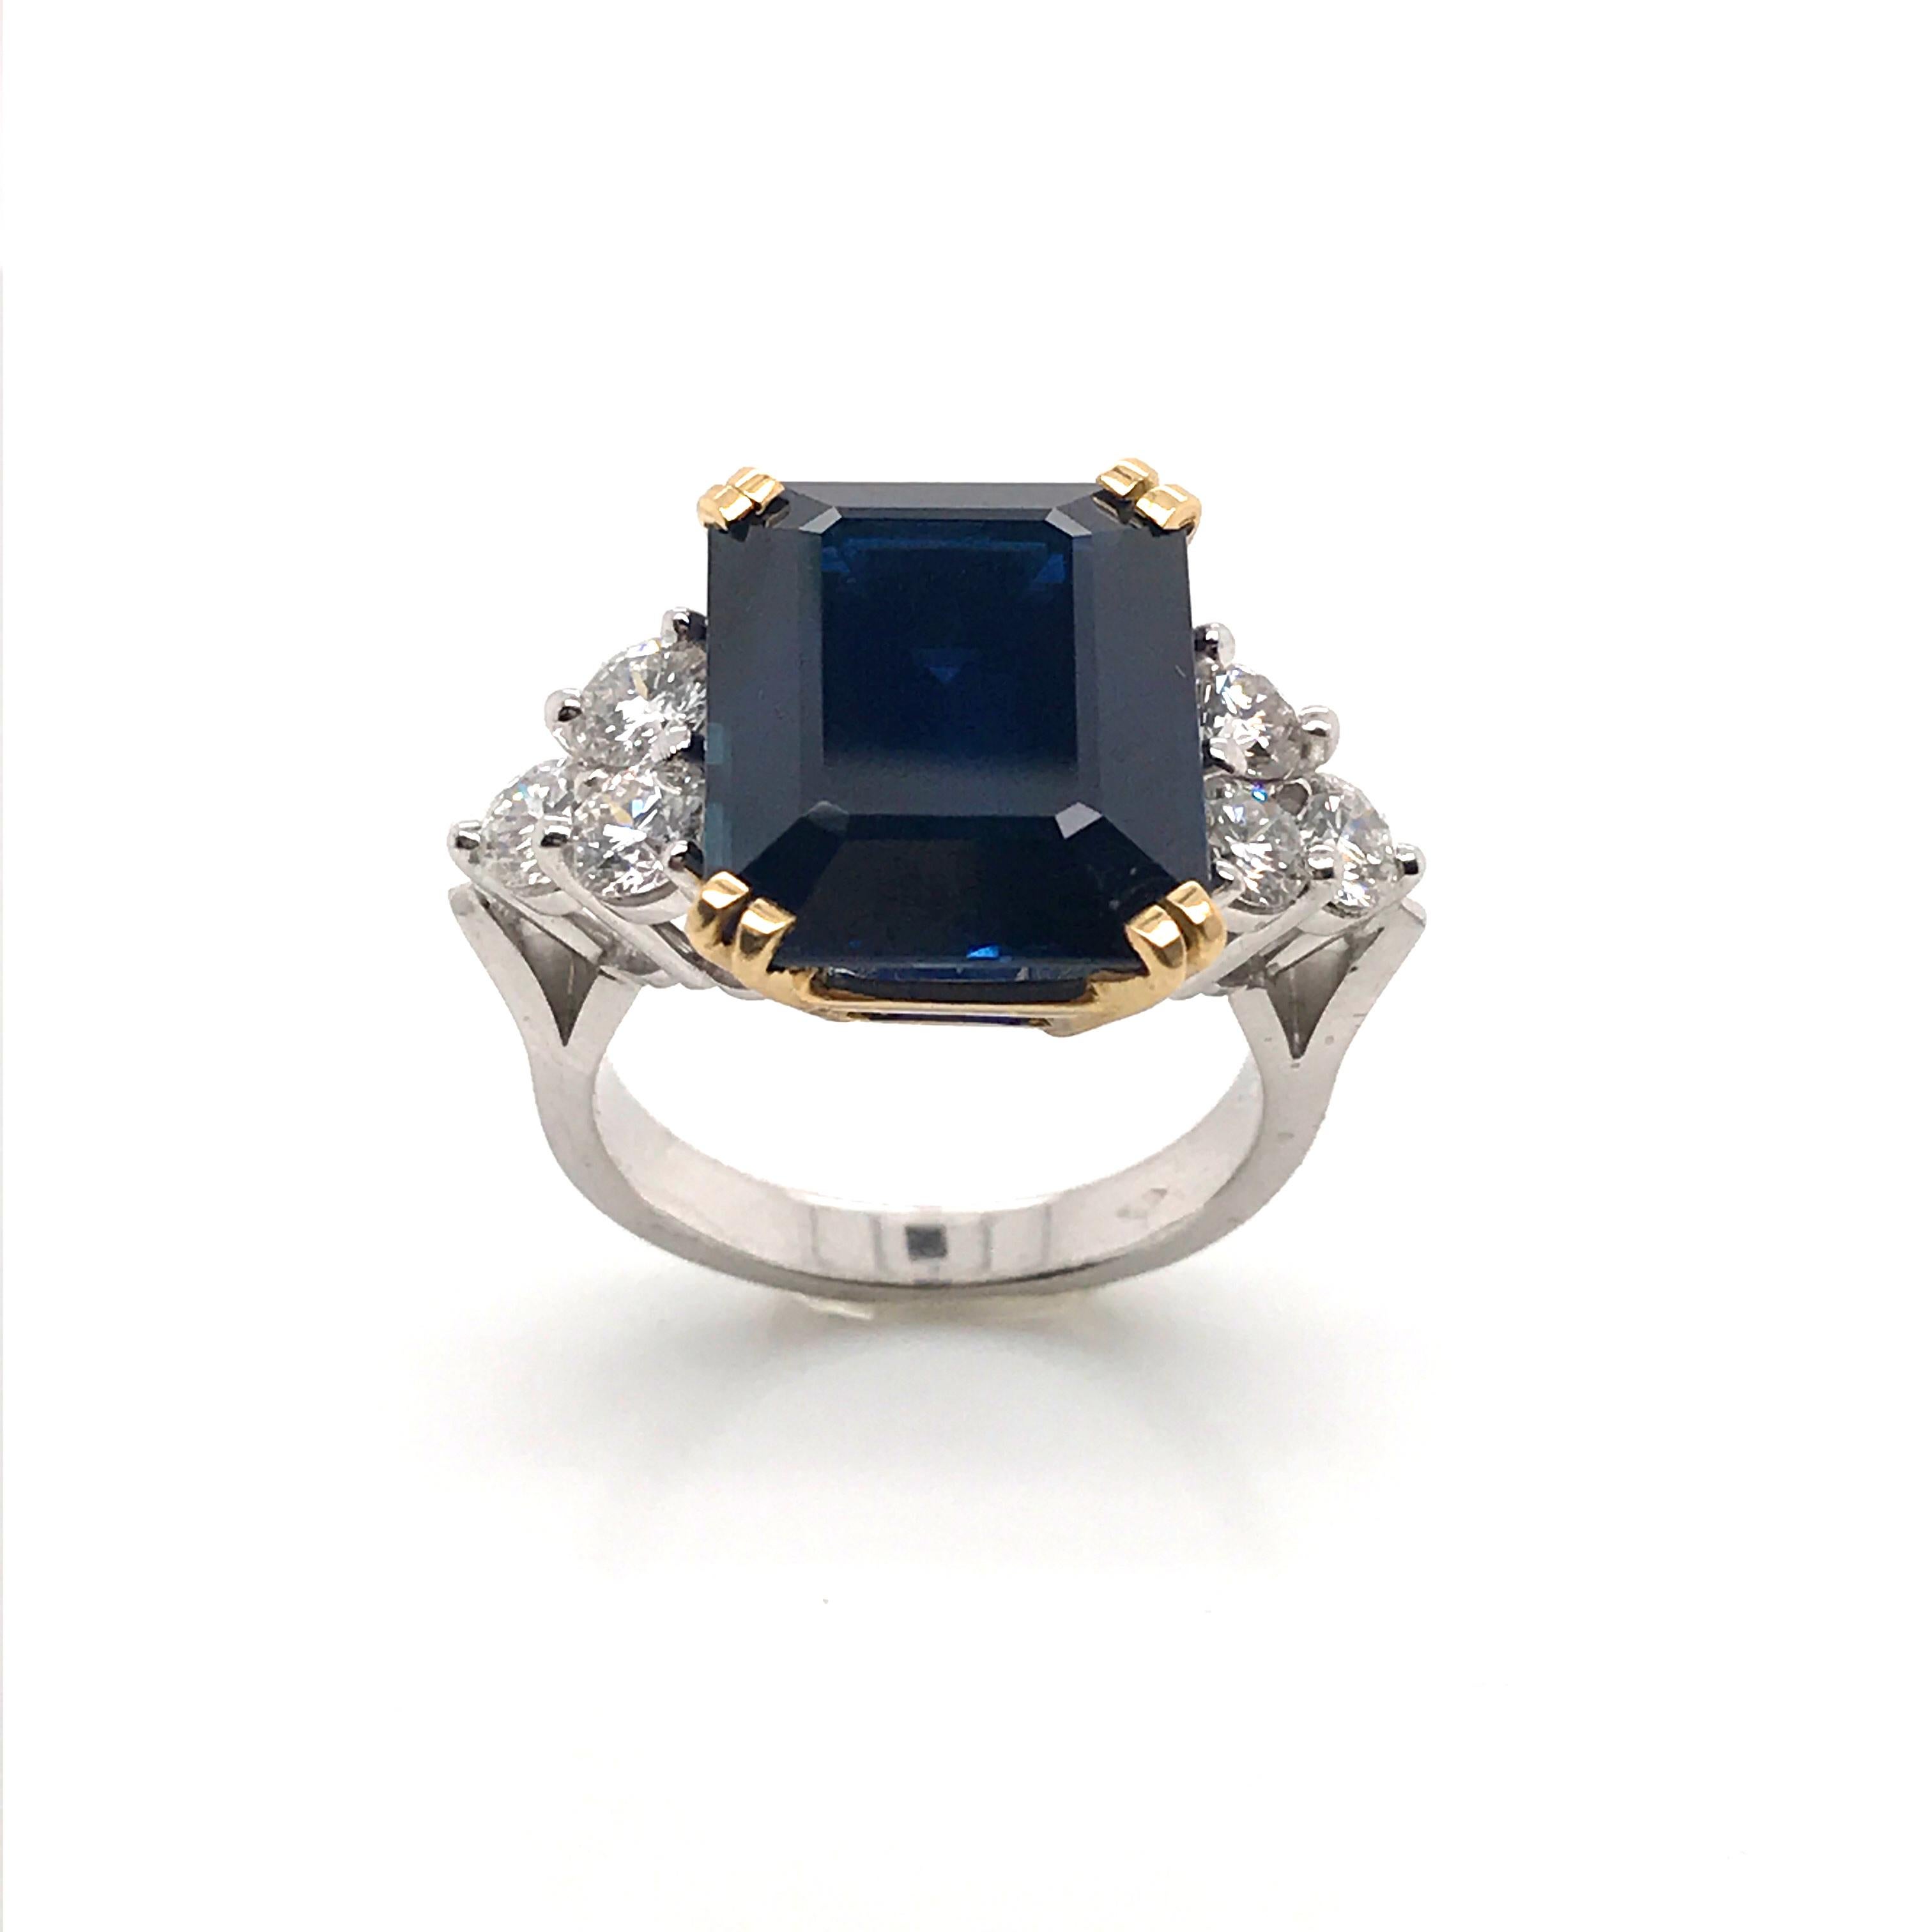 Ceylon Sapphire Diamonds Emerald size White and Yellow Gold Ring.
Ceylon Sapphire Form Emerald 14,35 Carat
6 White Diamonds 1,62 Carat Color F/G
White Gold 18 Carat
Yellow Gold 18 Carat